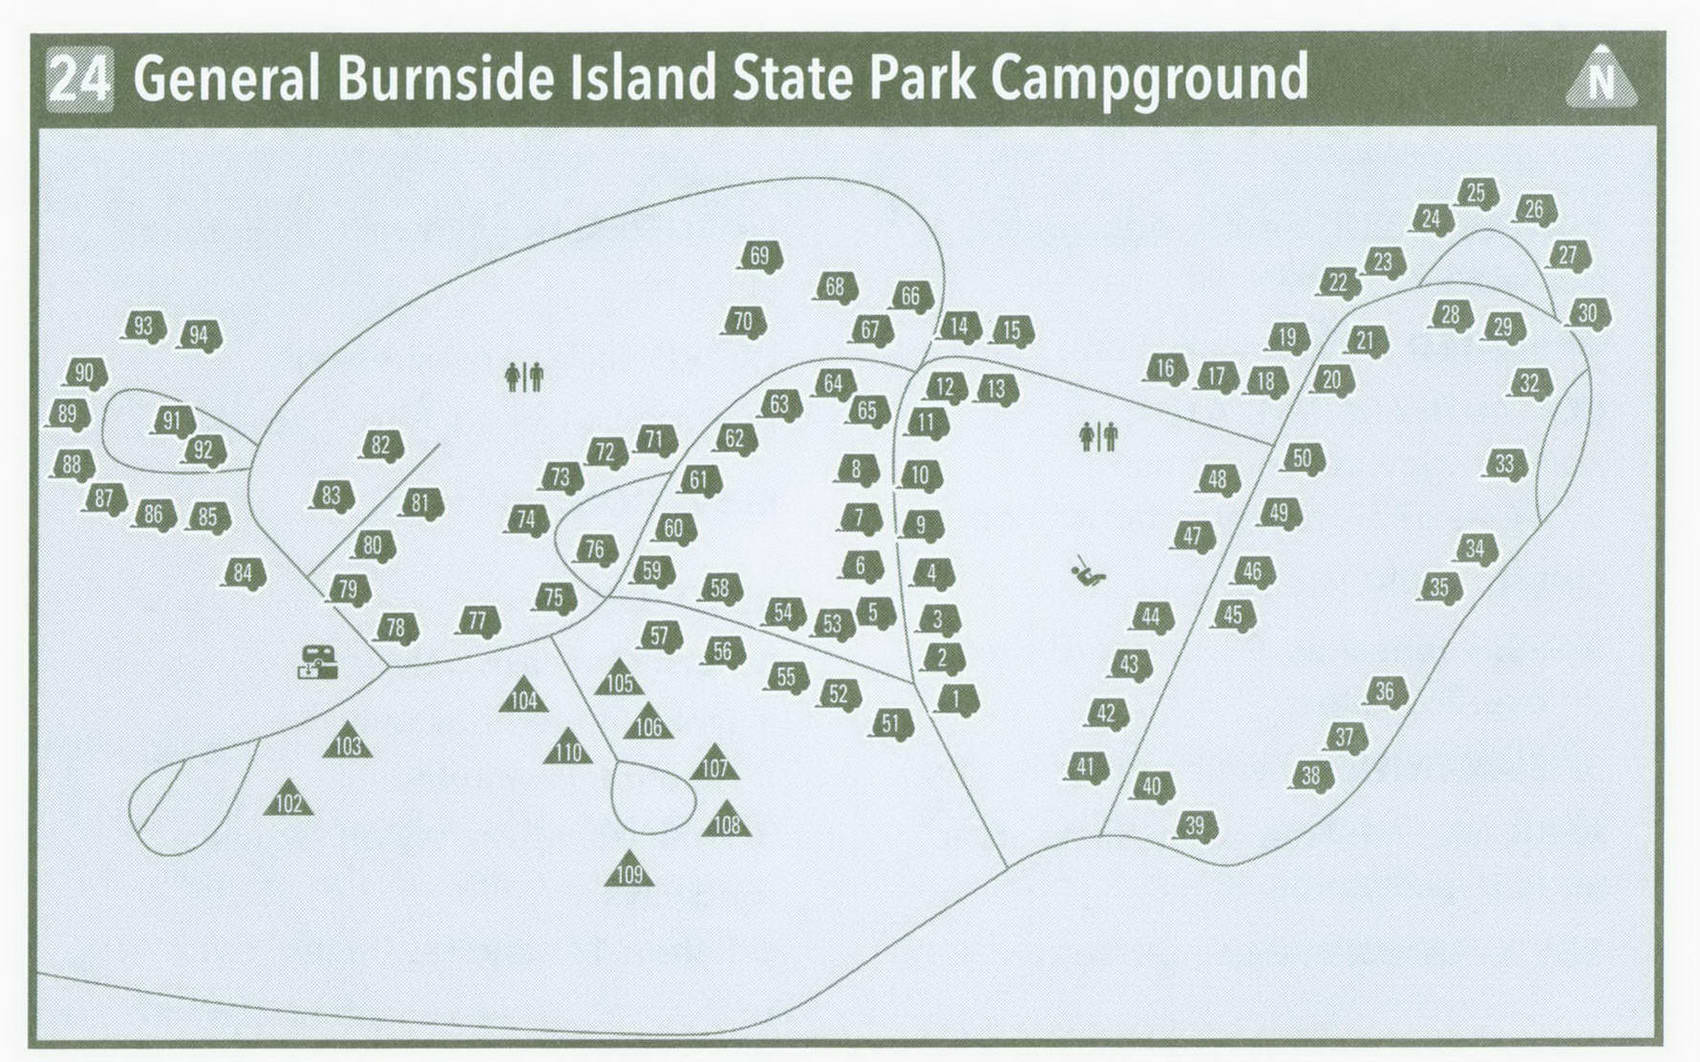 General Burnside Island State Park Campground